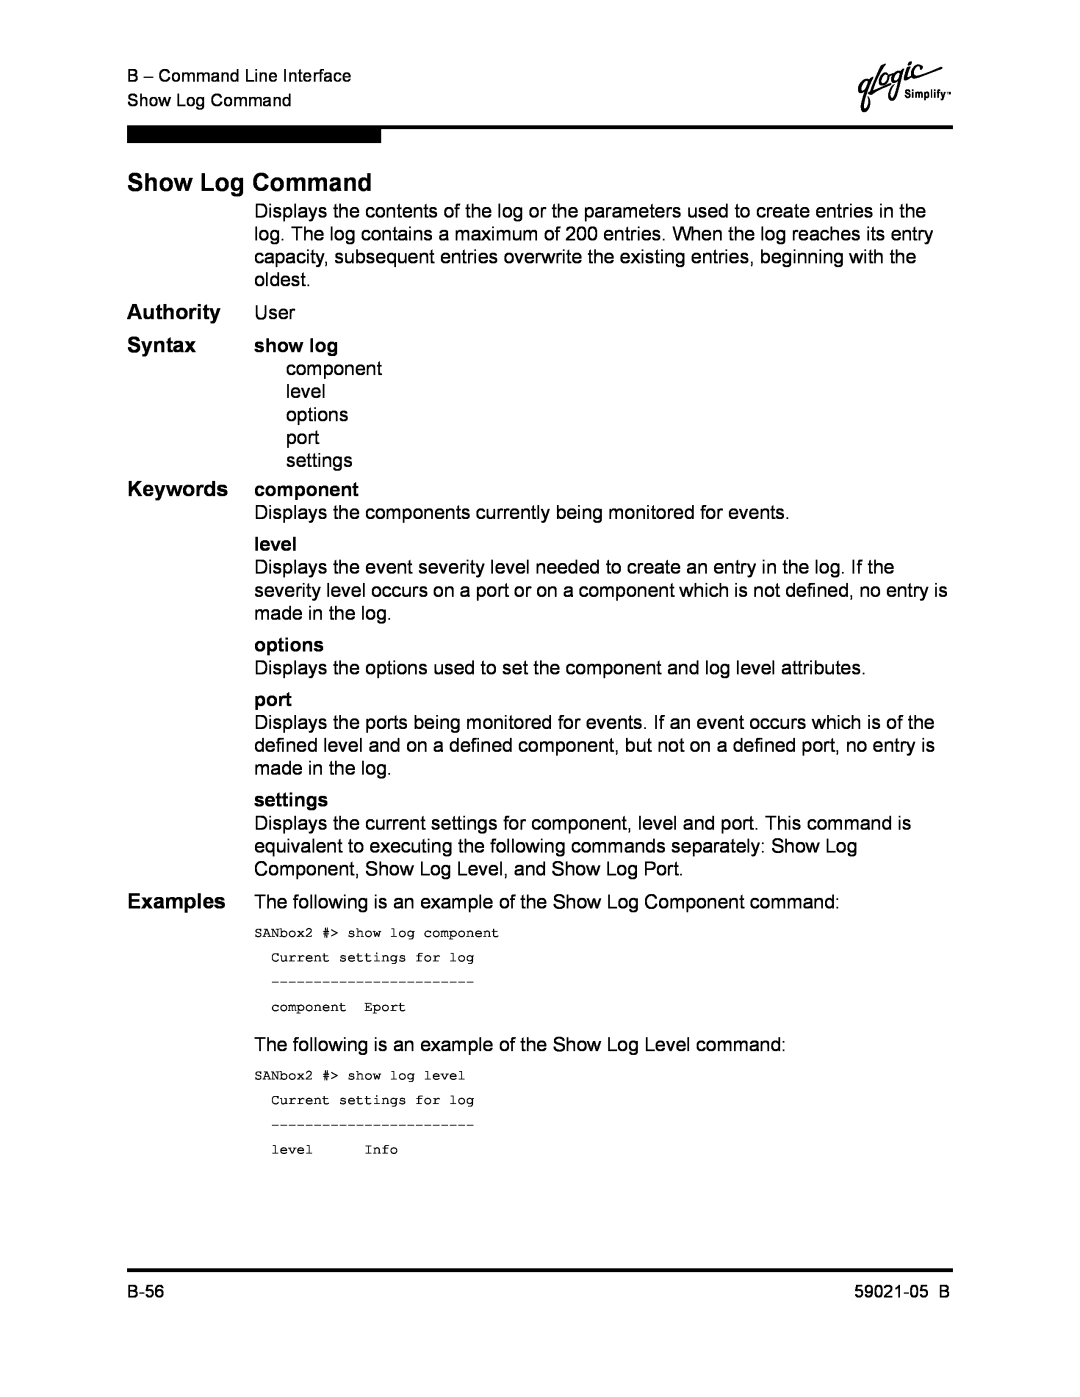 Q-Logic 59021-05 B manual Show Log Command, Keywords component, Authority User, level, options, port, settings 